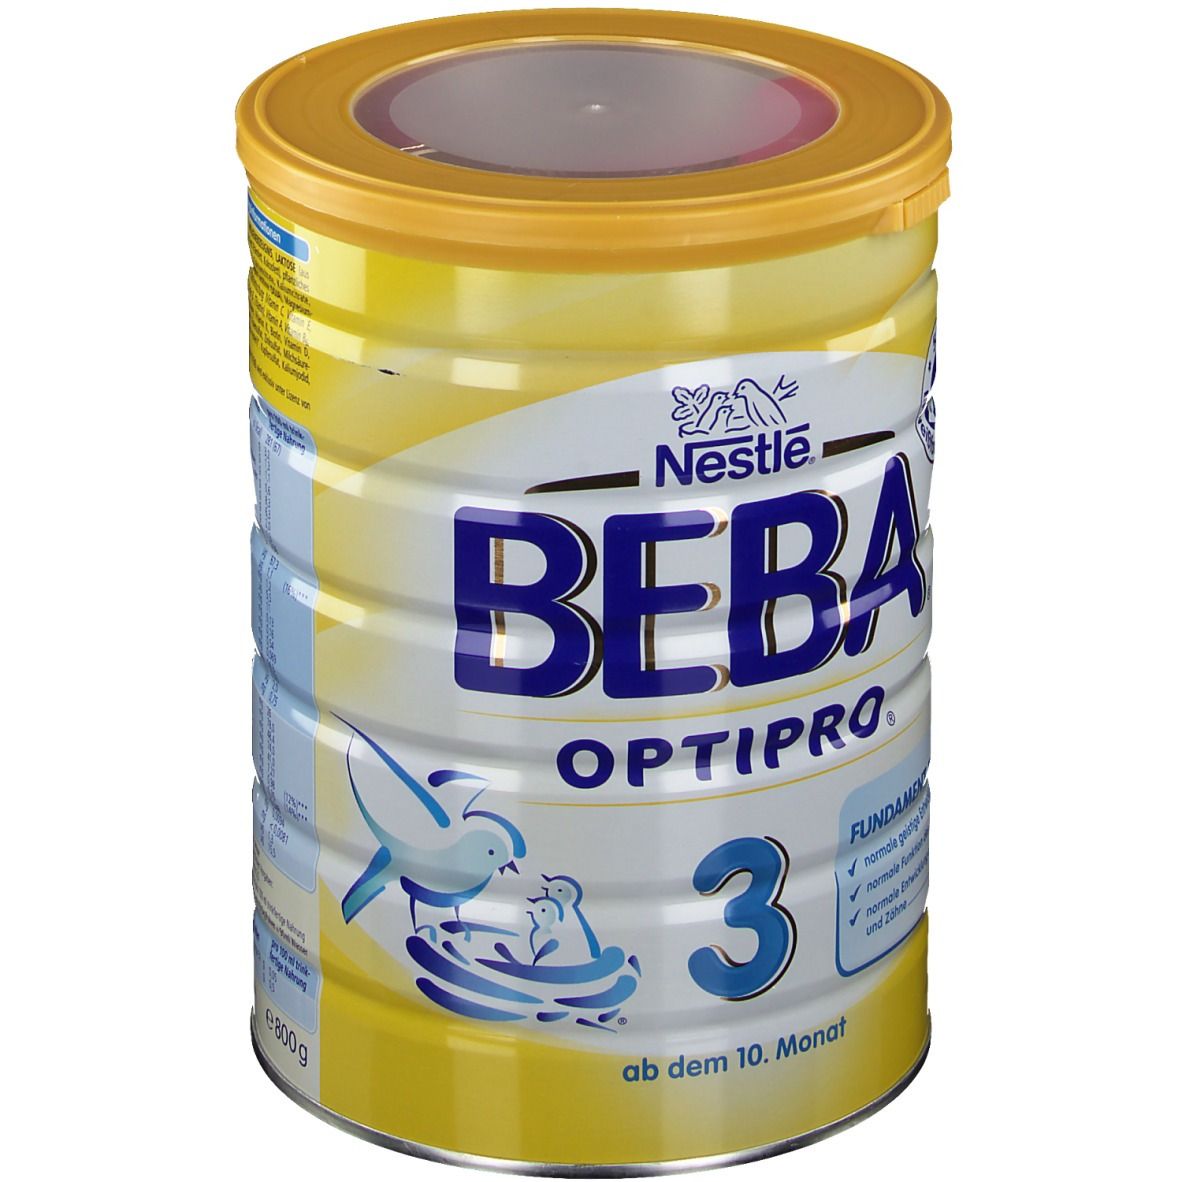 Nestlé BEBA OPTIPRO 3 Folgemilch ab dem 10. Monat